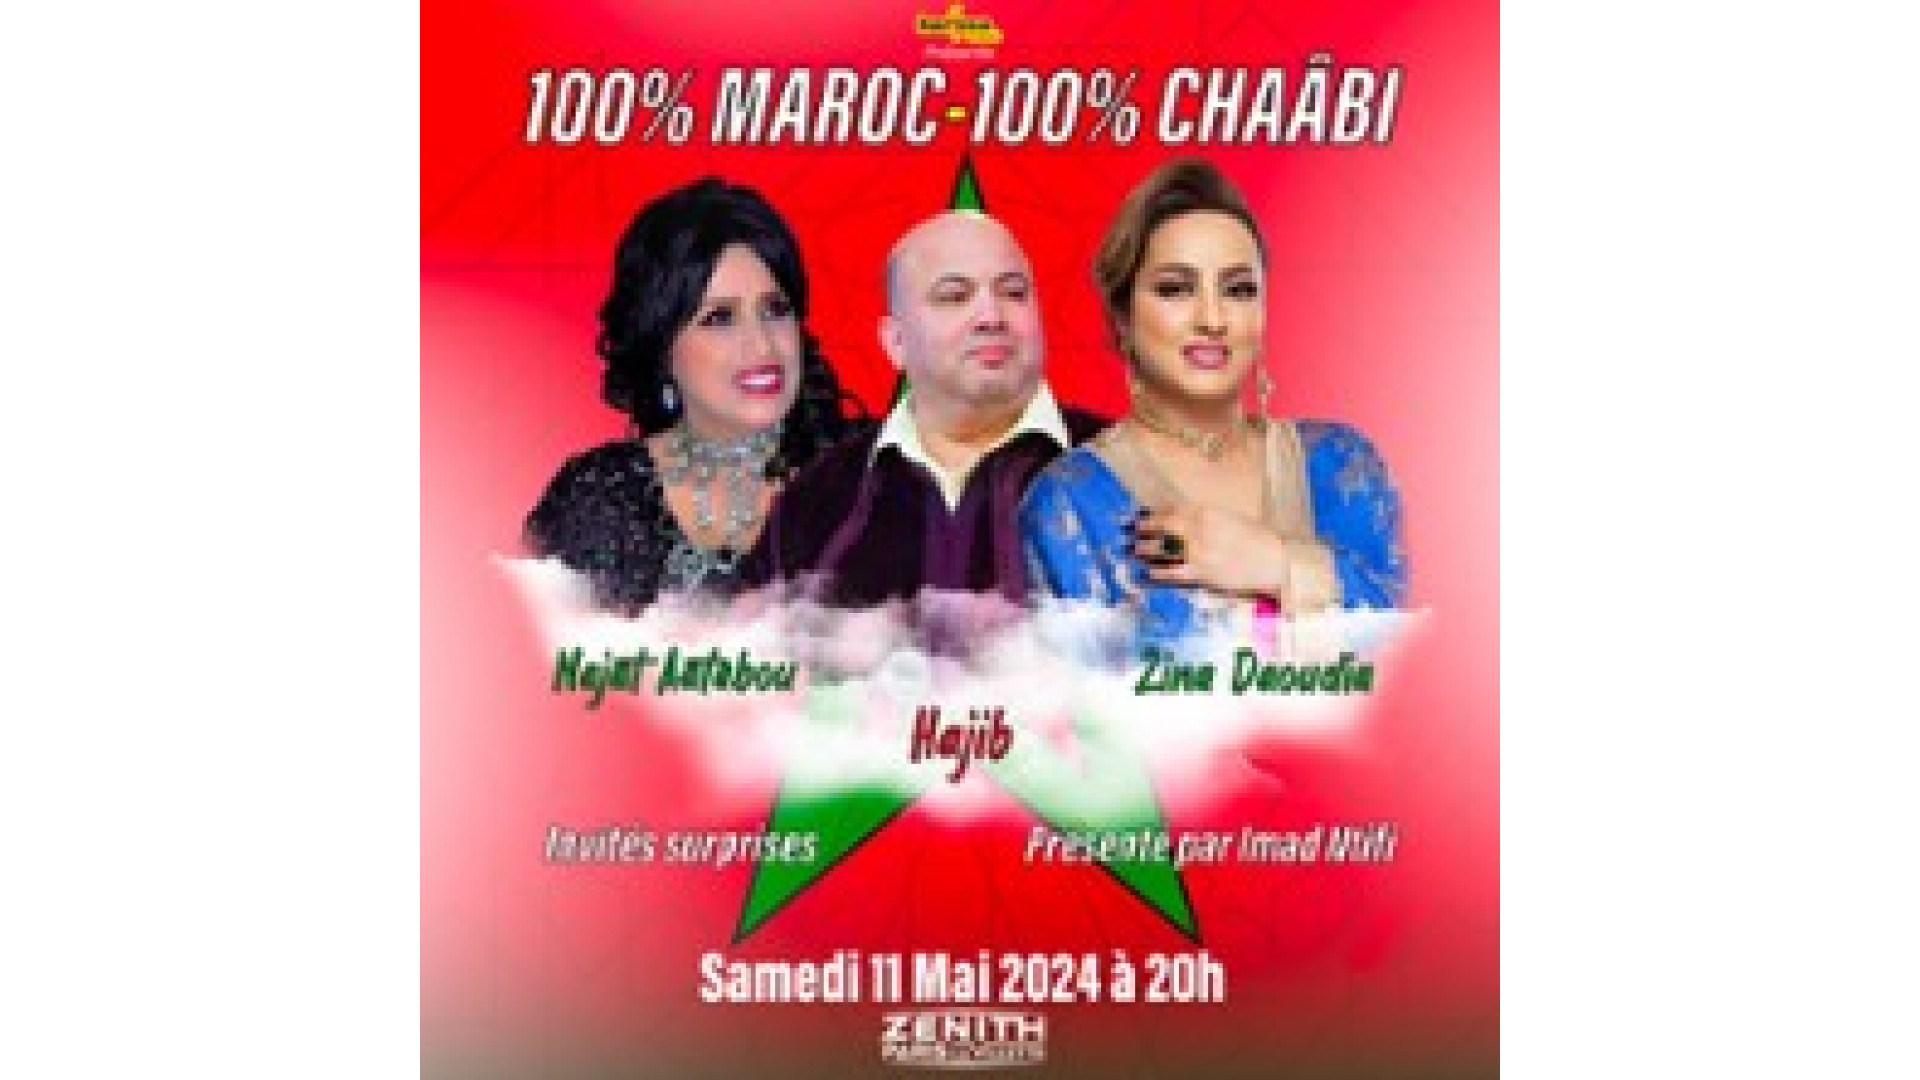 Concert Chaabi à Paris